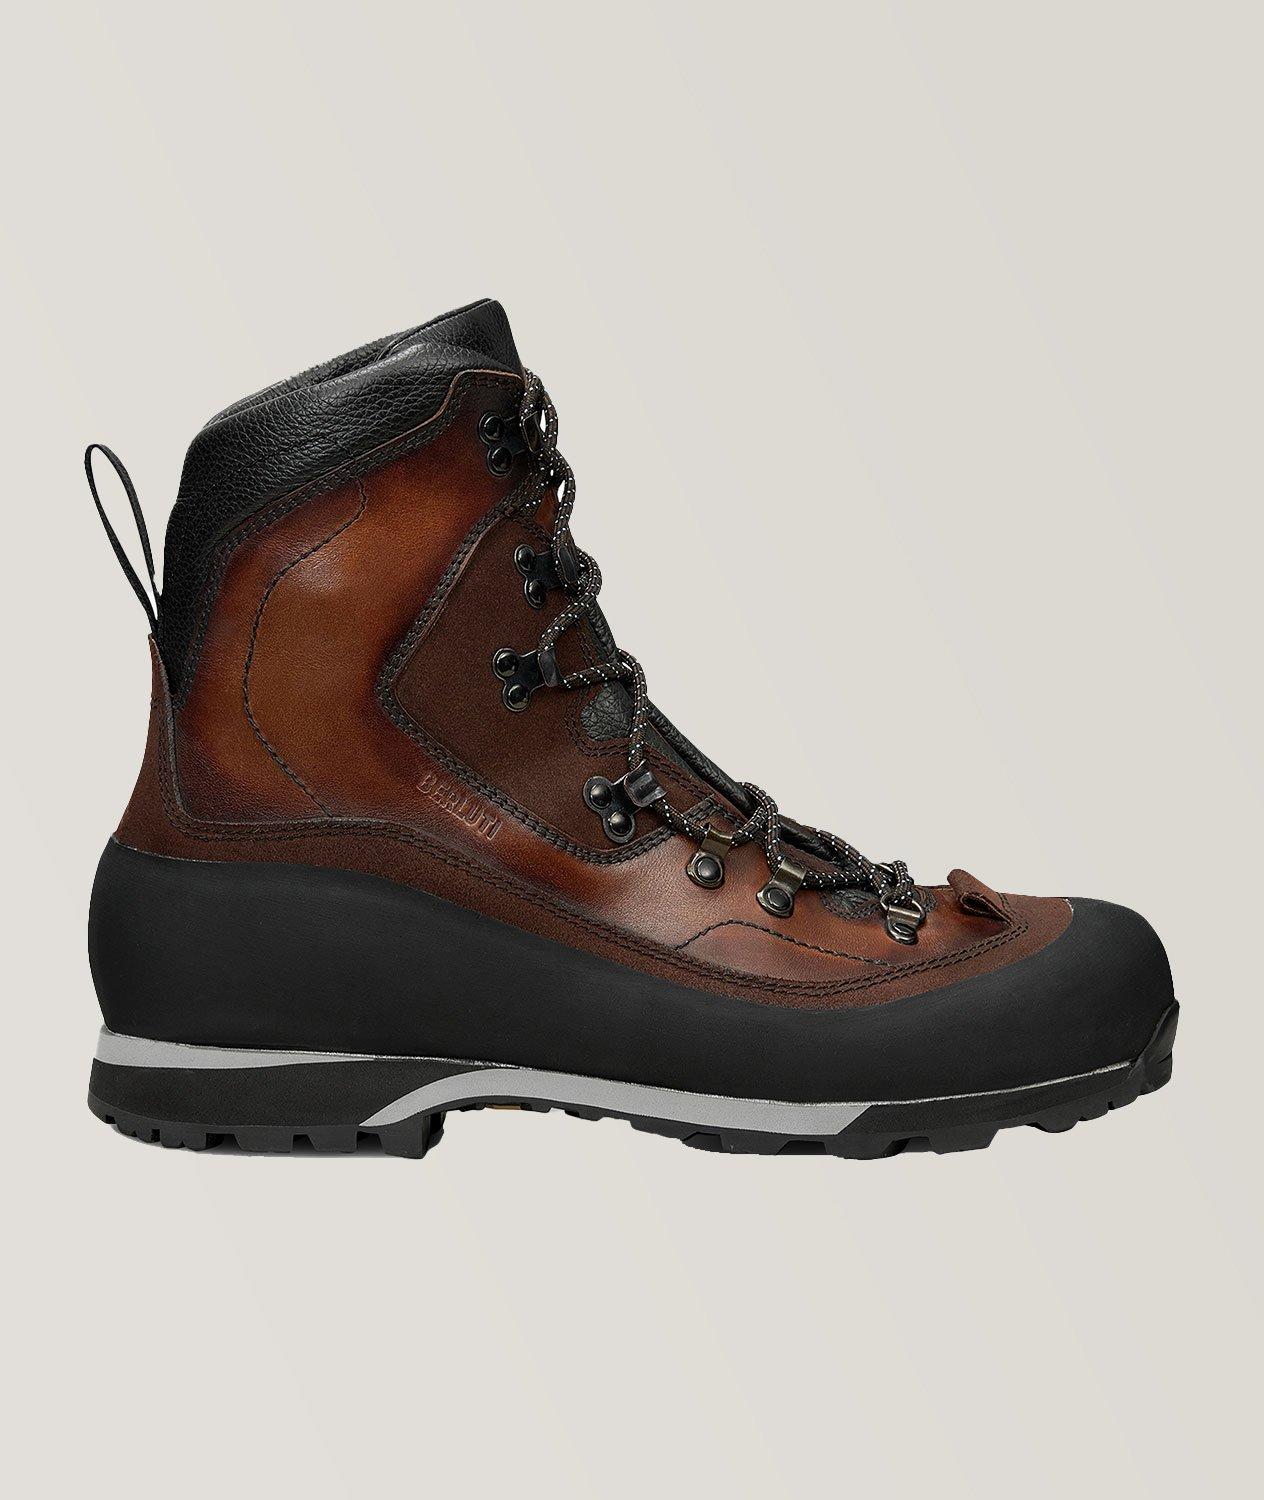 Aspen Leather Alpine Boot image 0